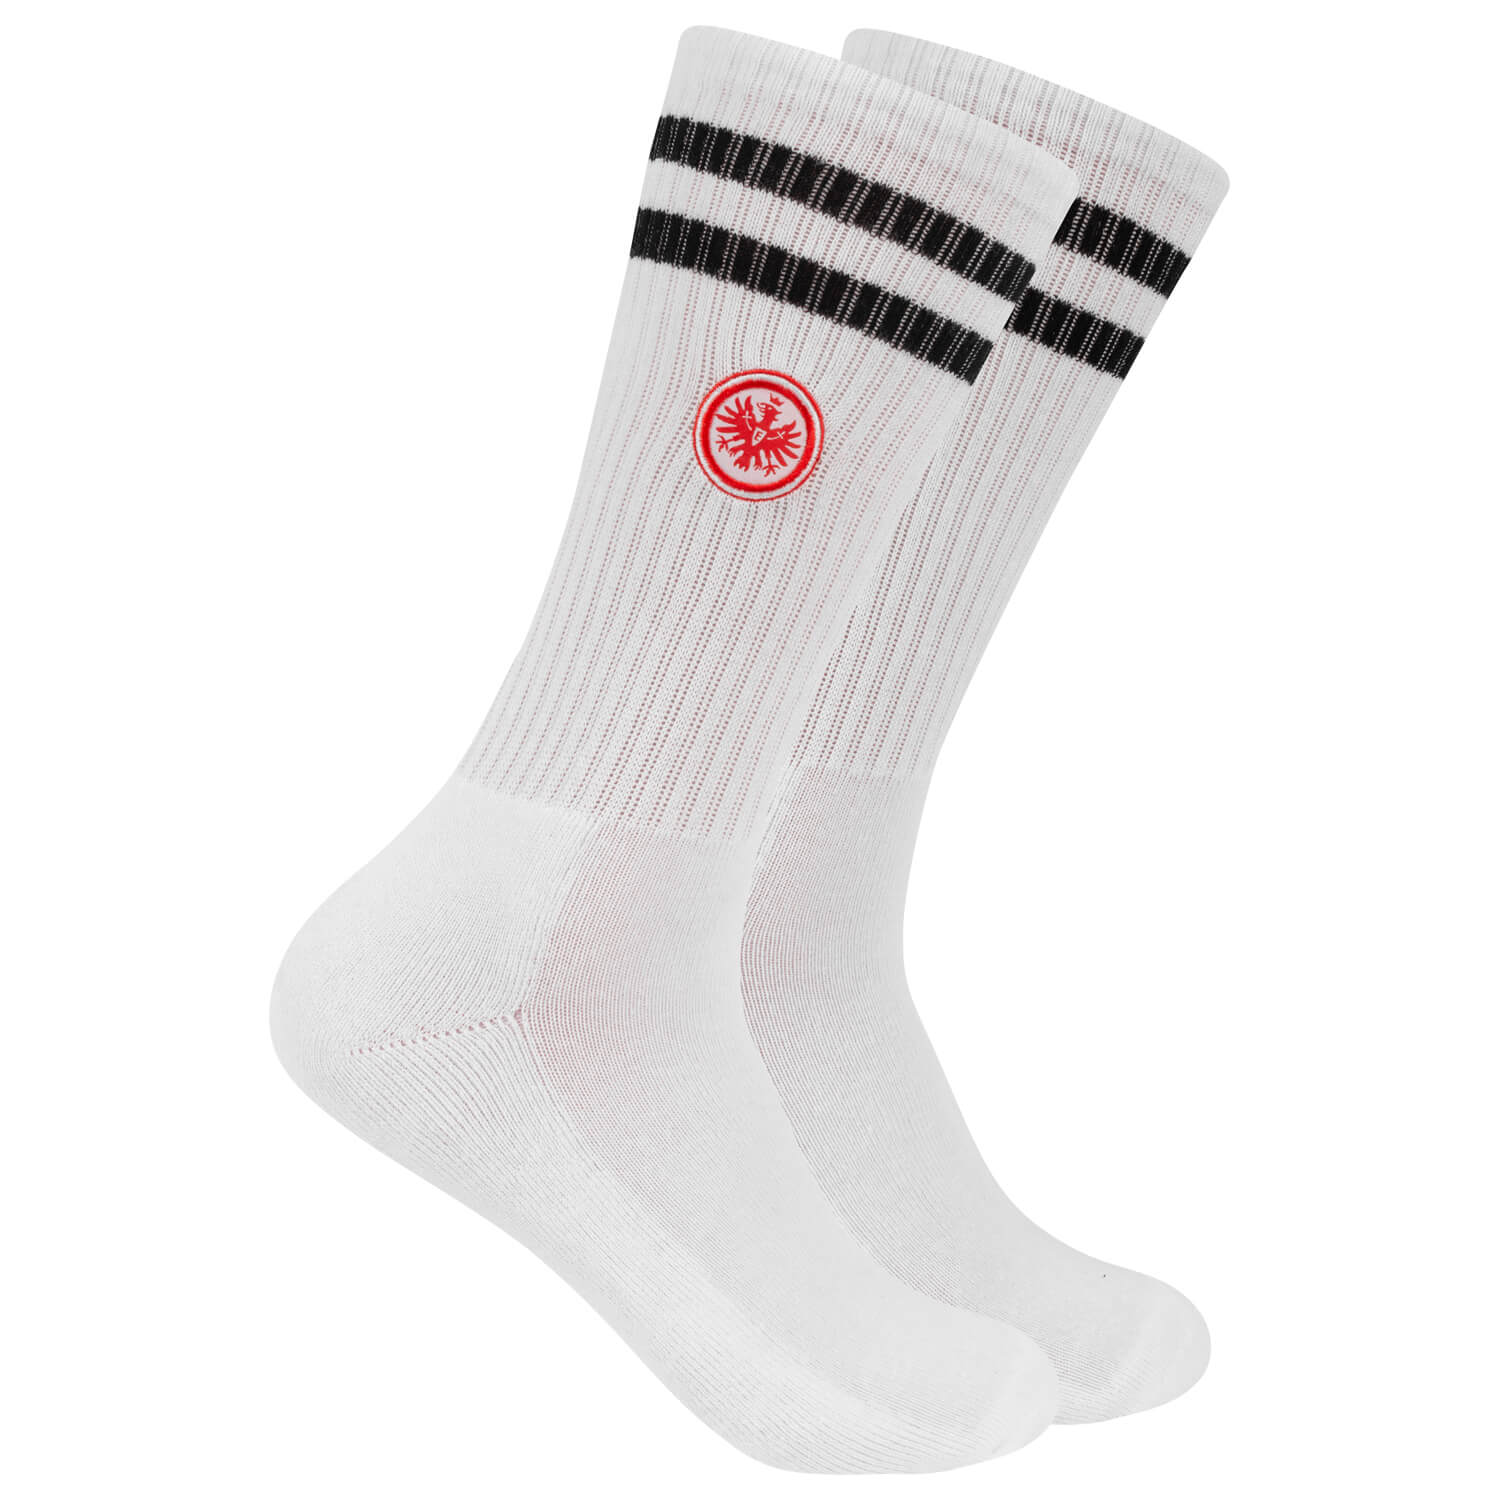 Bild 2: Crew Socks Weiß Logo